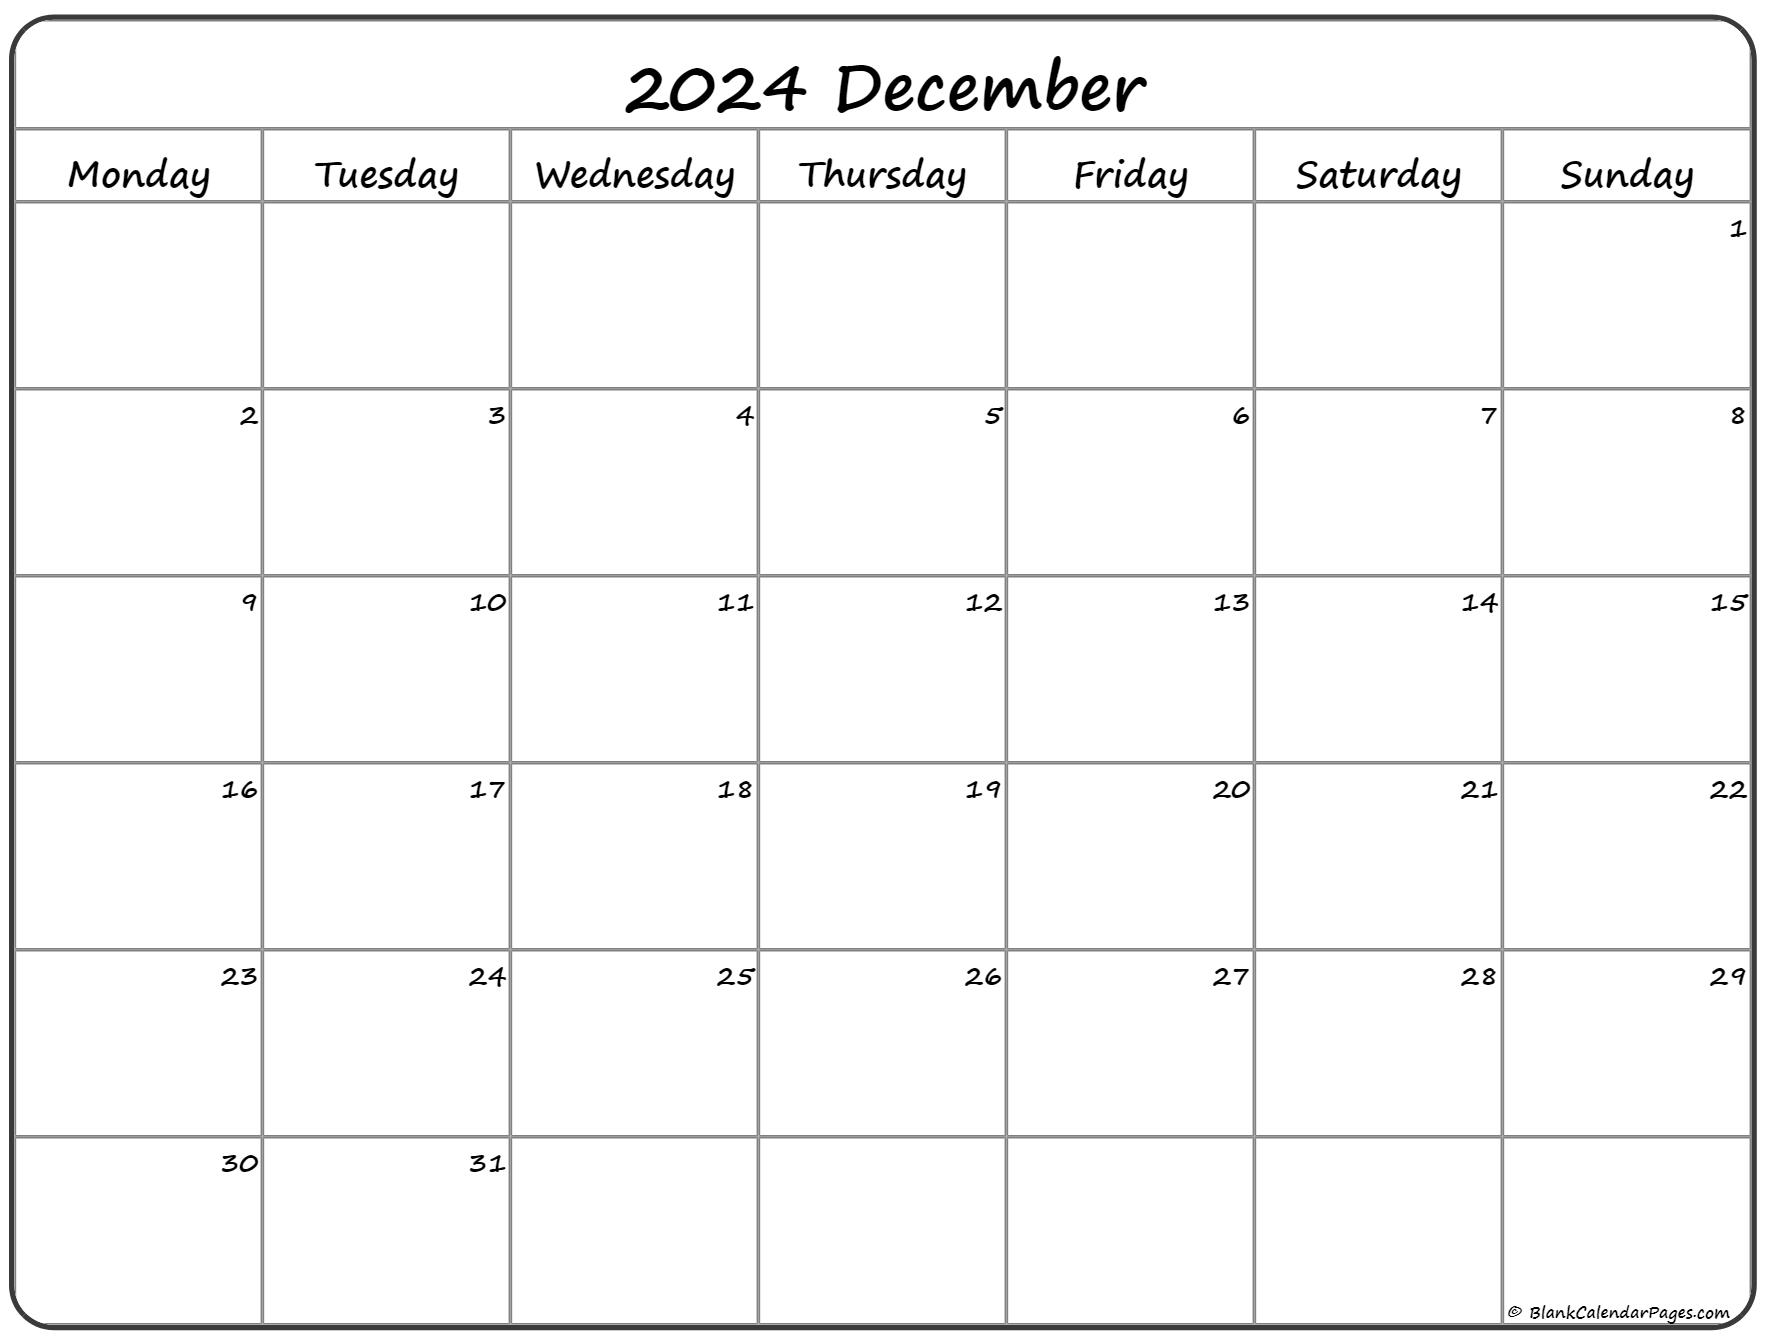 December 2022 Monday Calendar Monday to Sunday